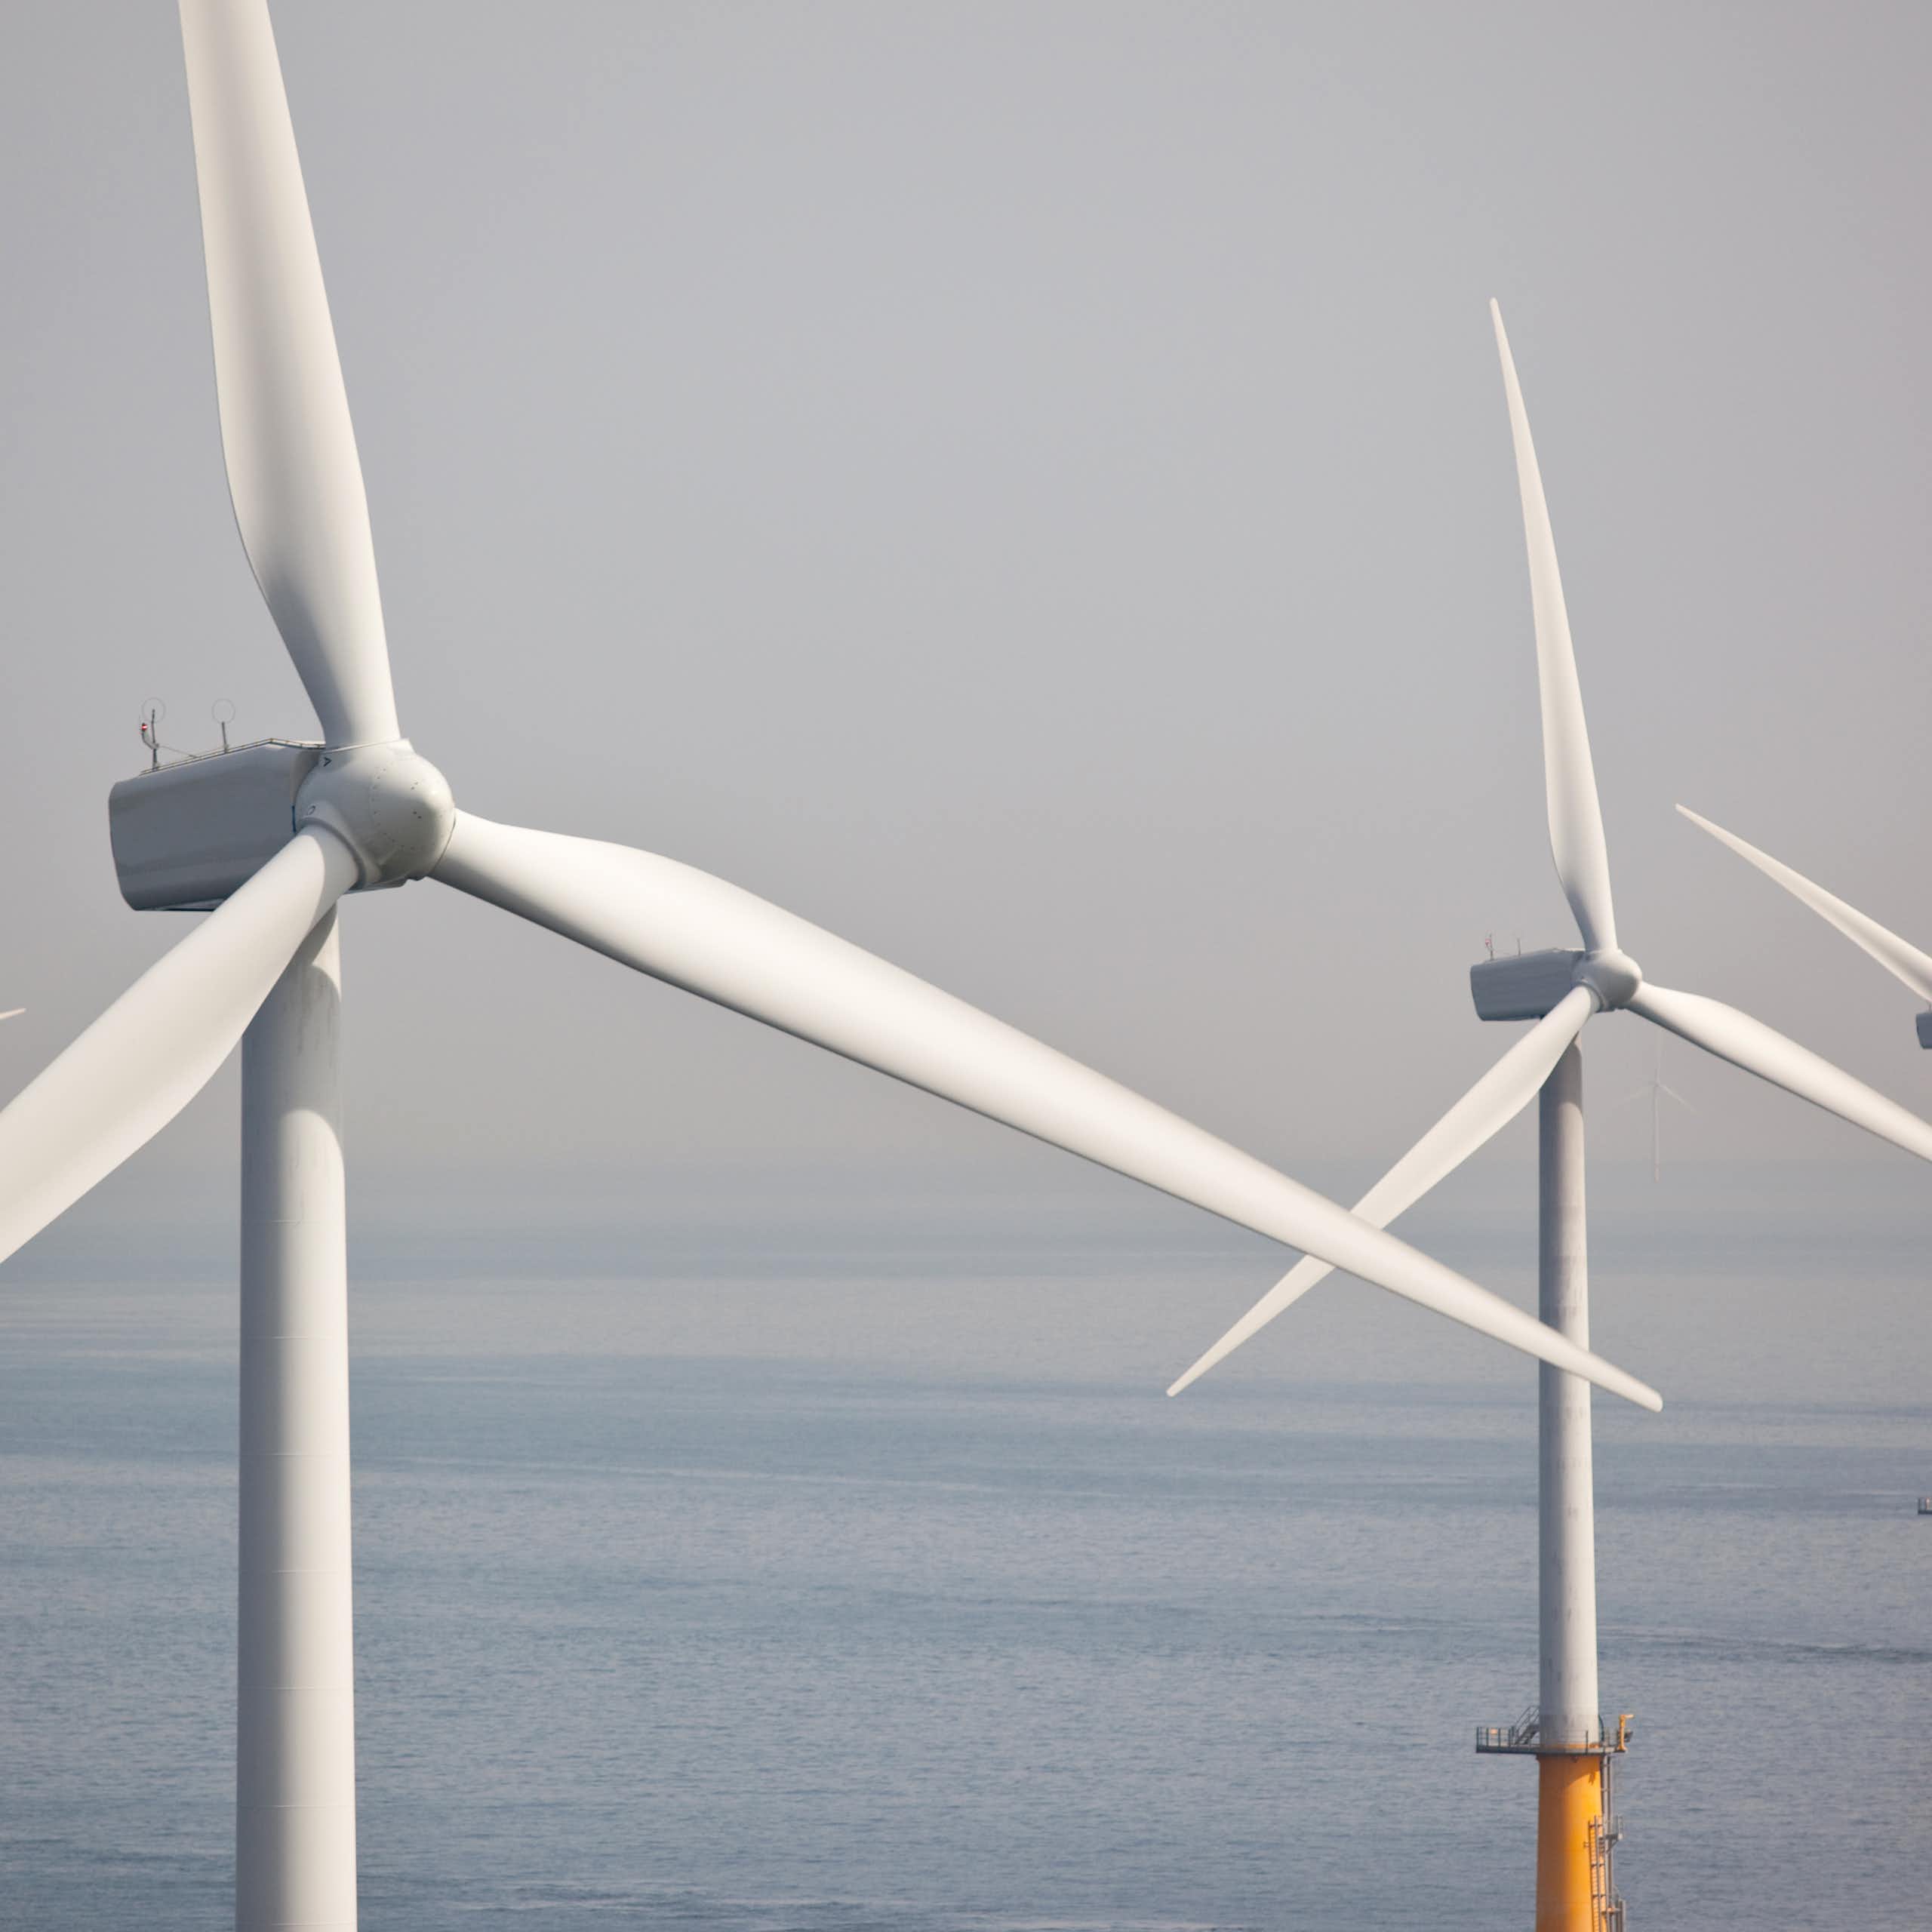 wind farm at sea